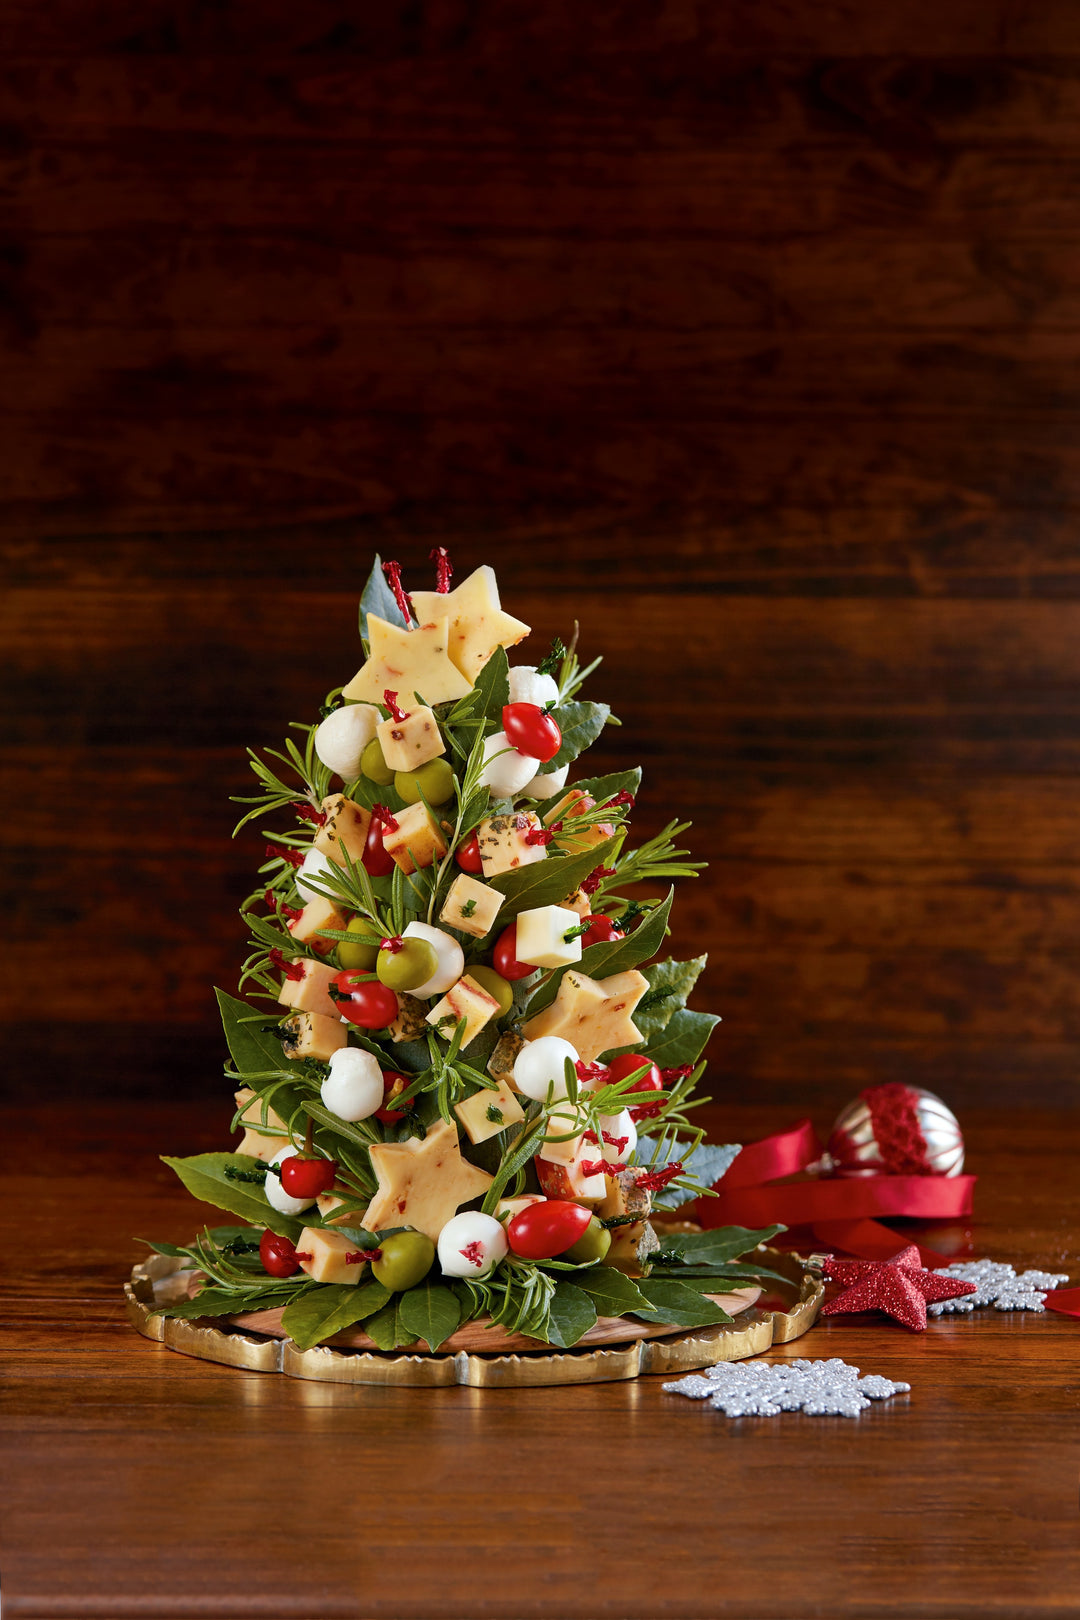 Cheesemas Tree - 12 Recipes of Christmas